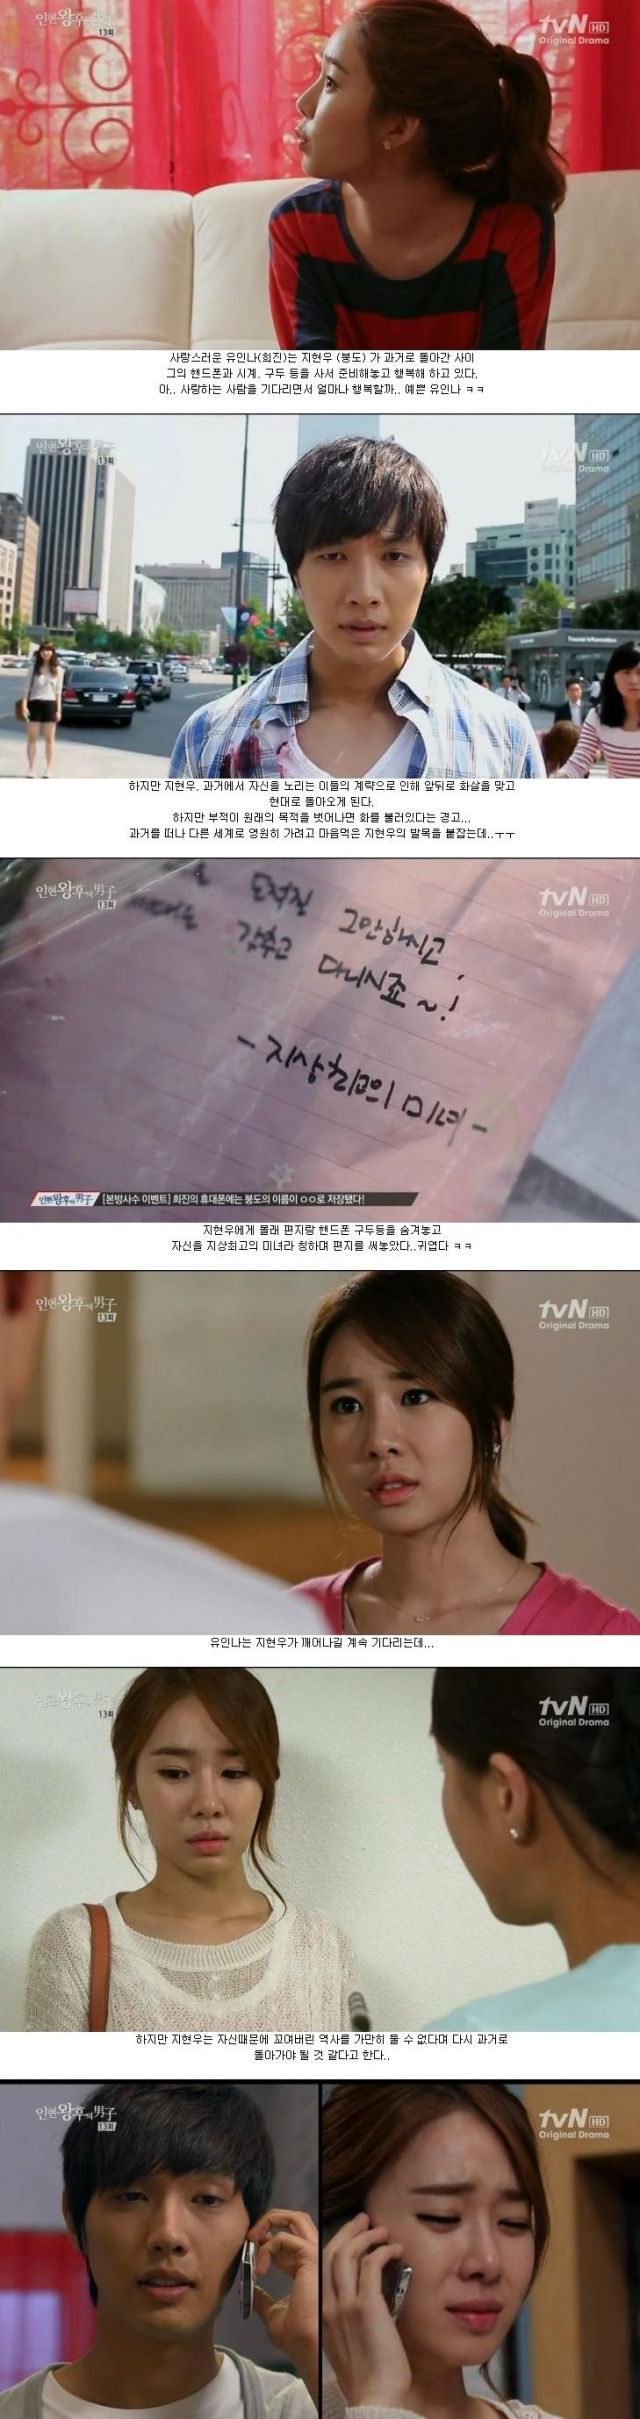 episode 13 captures for the Korean drama 'Queen In-hyun's Man'